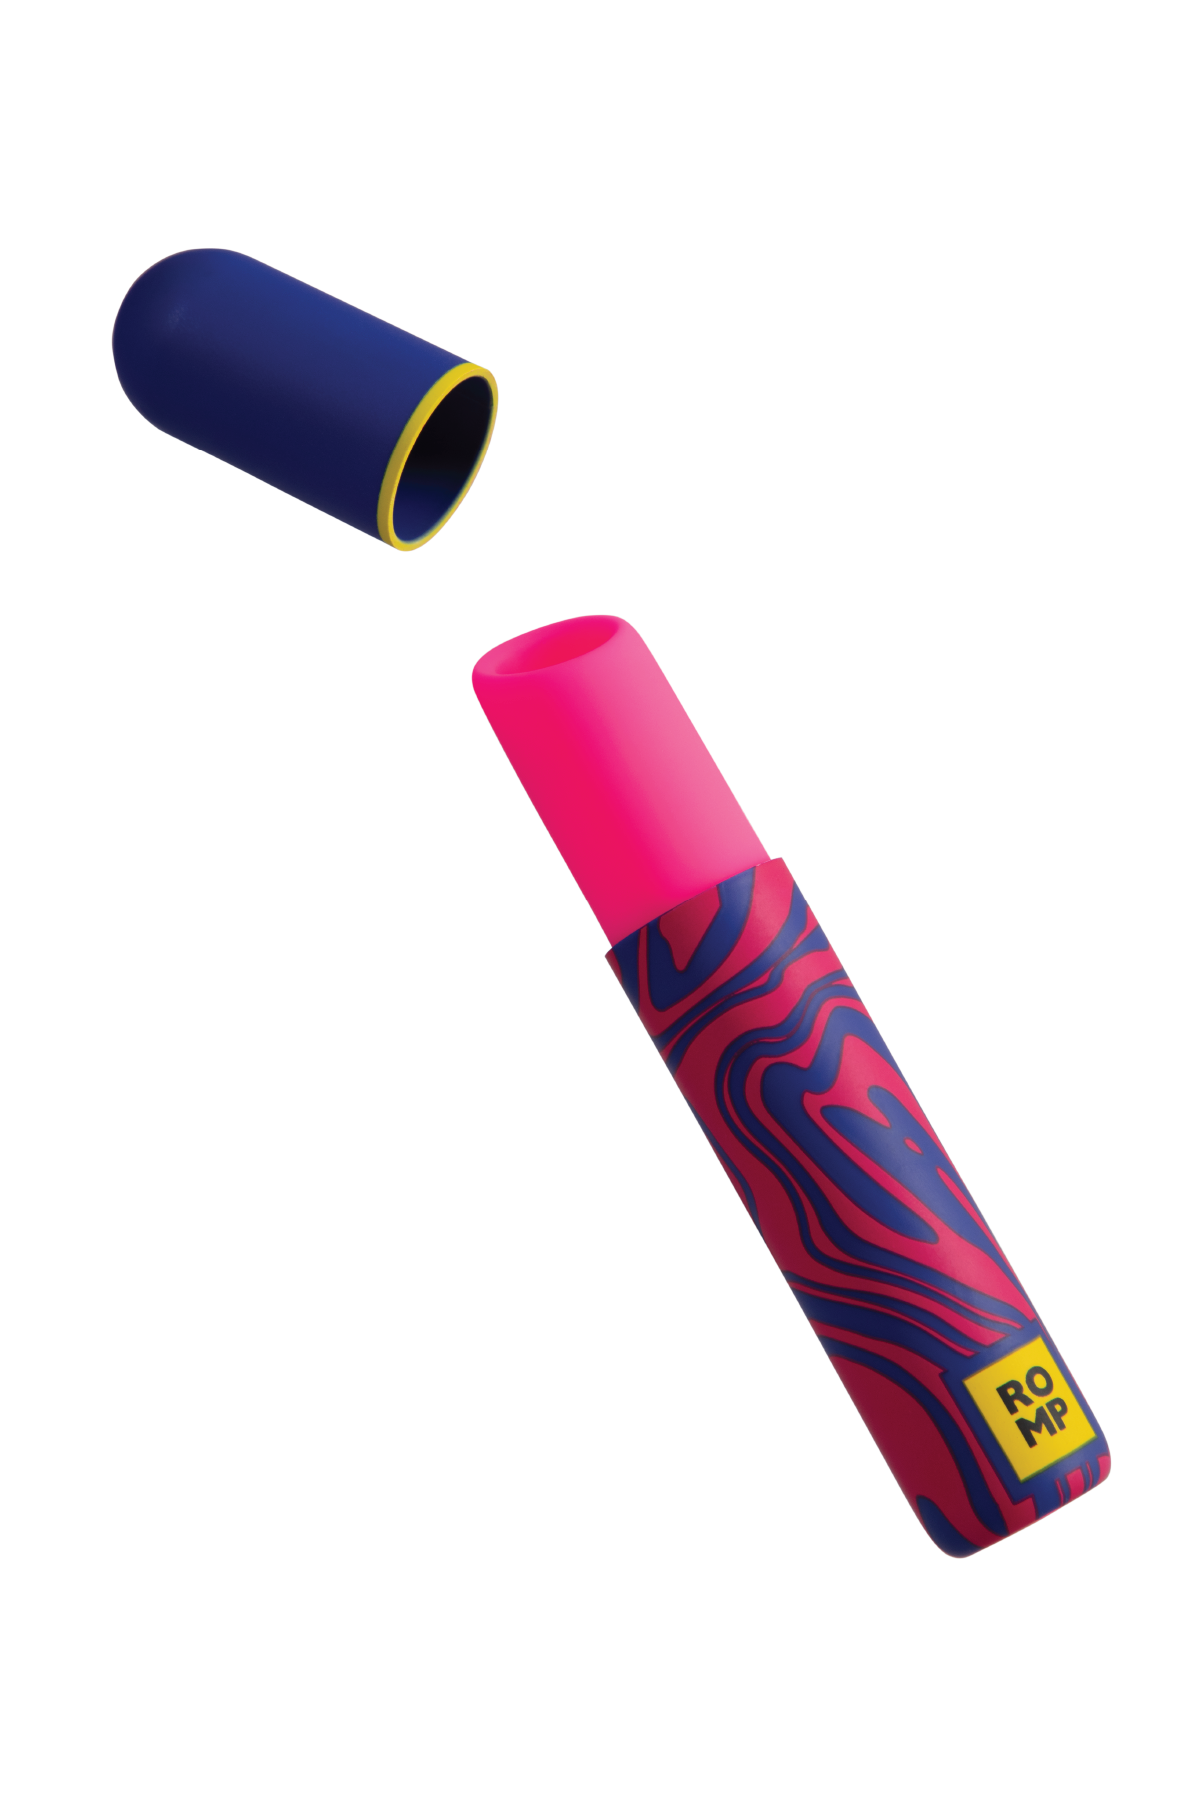 ROMP Lipstick Vibrator | Clitoral Stimulator